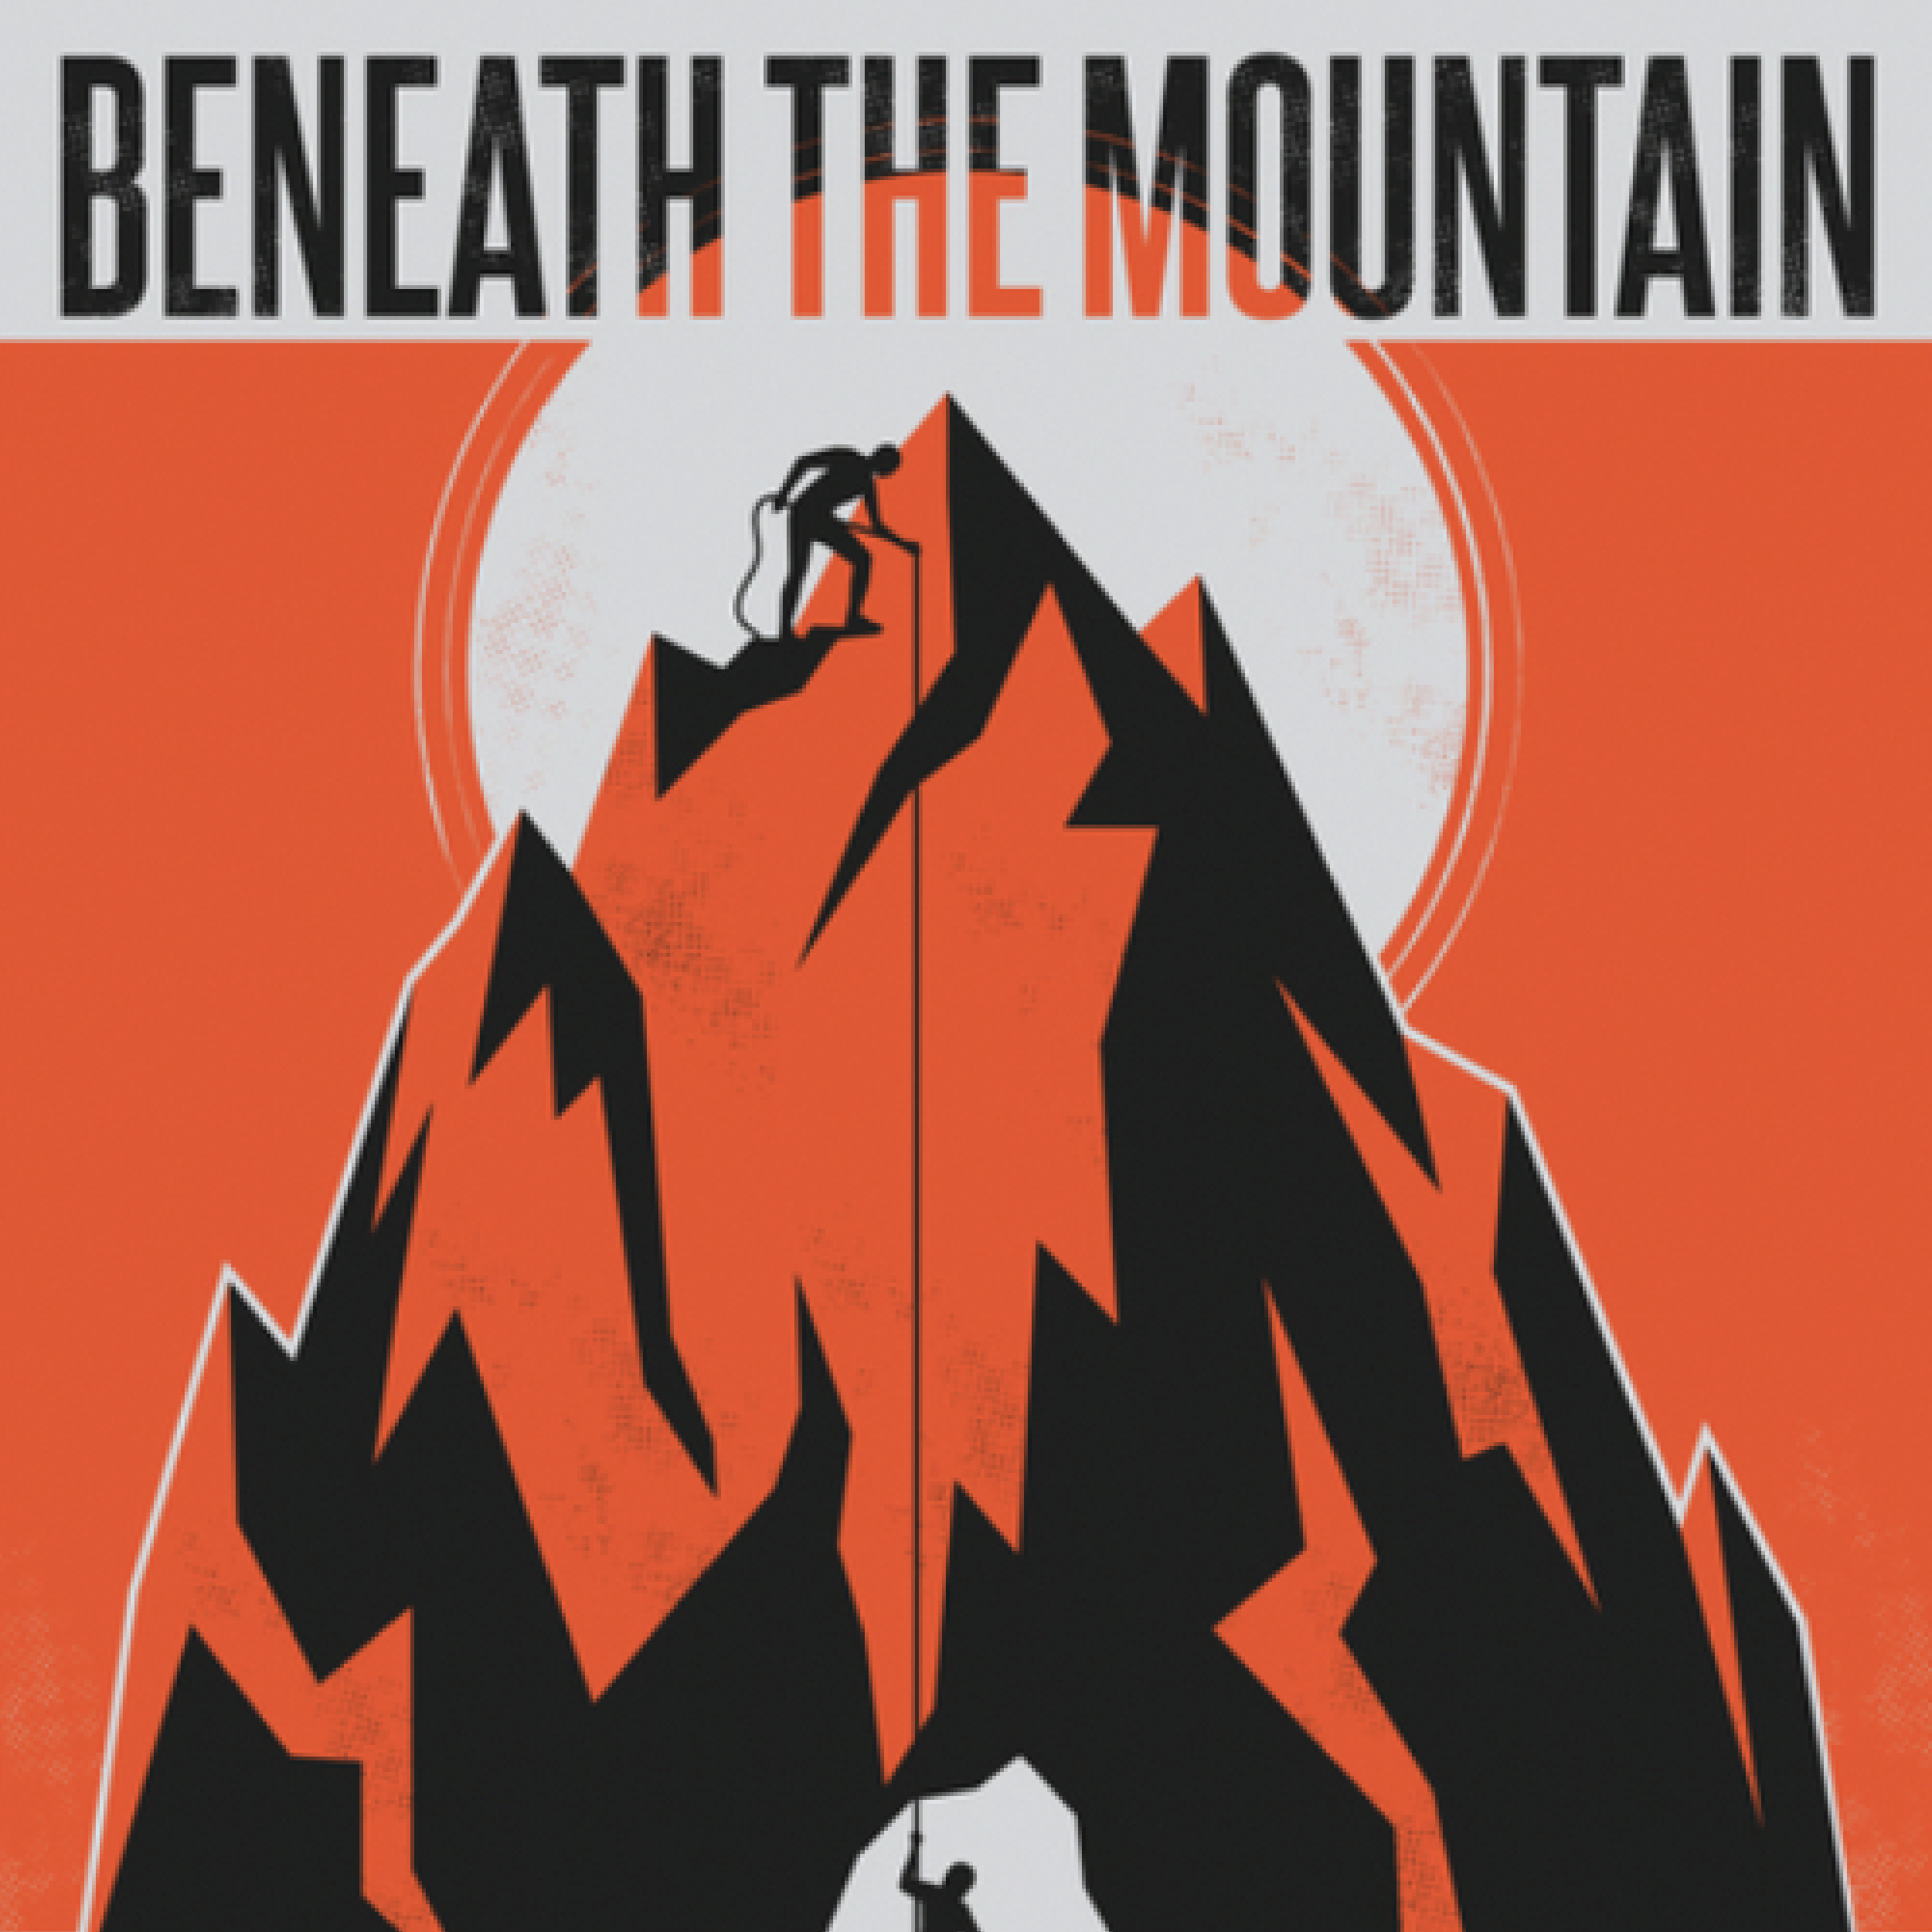 Beneath the Mountain by Abu Jamal